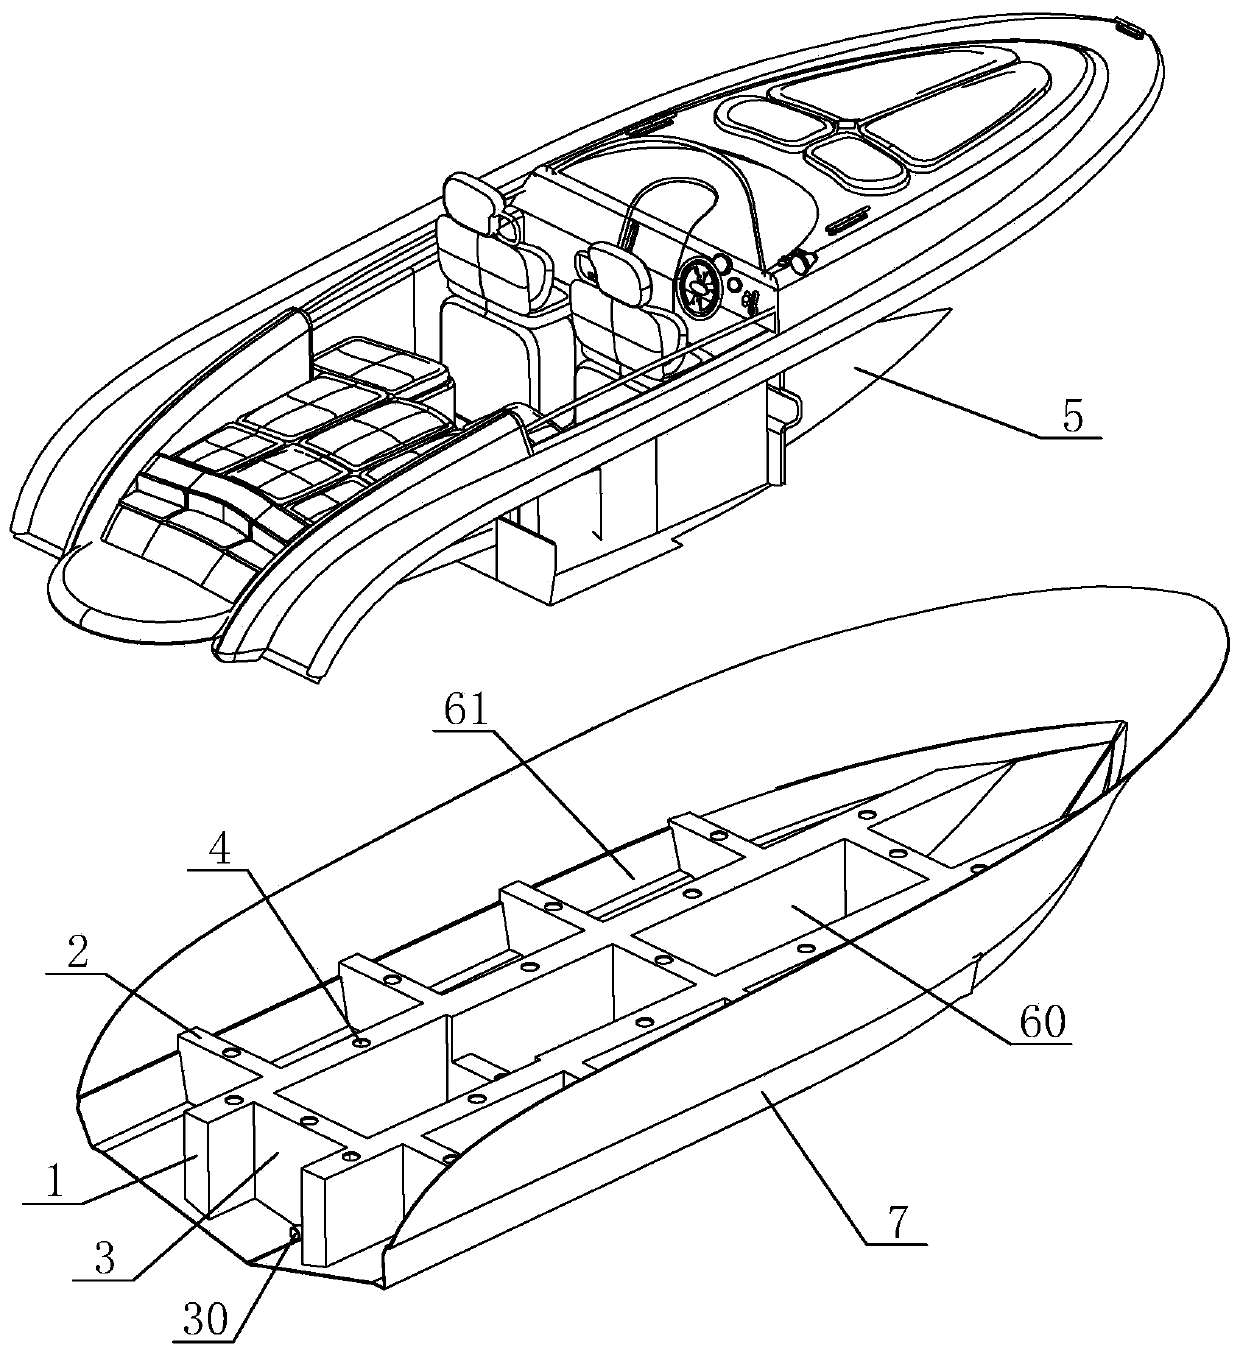 Manufacturing process of anti-sinking fiberglass boat